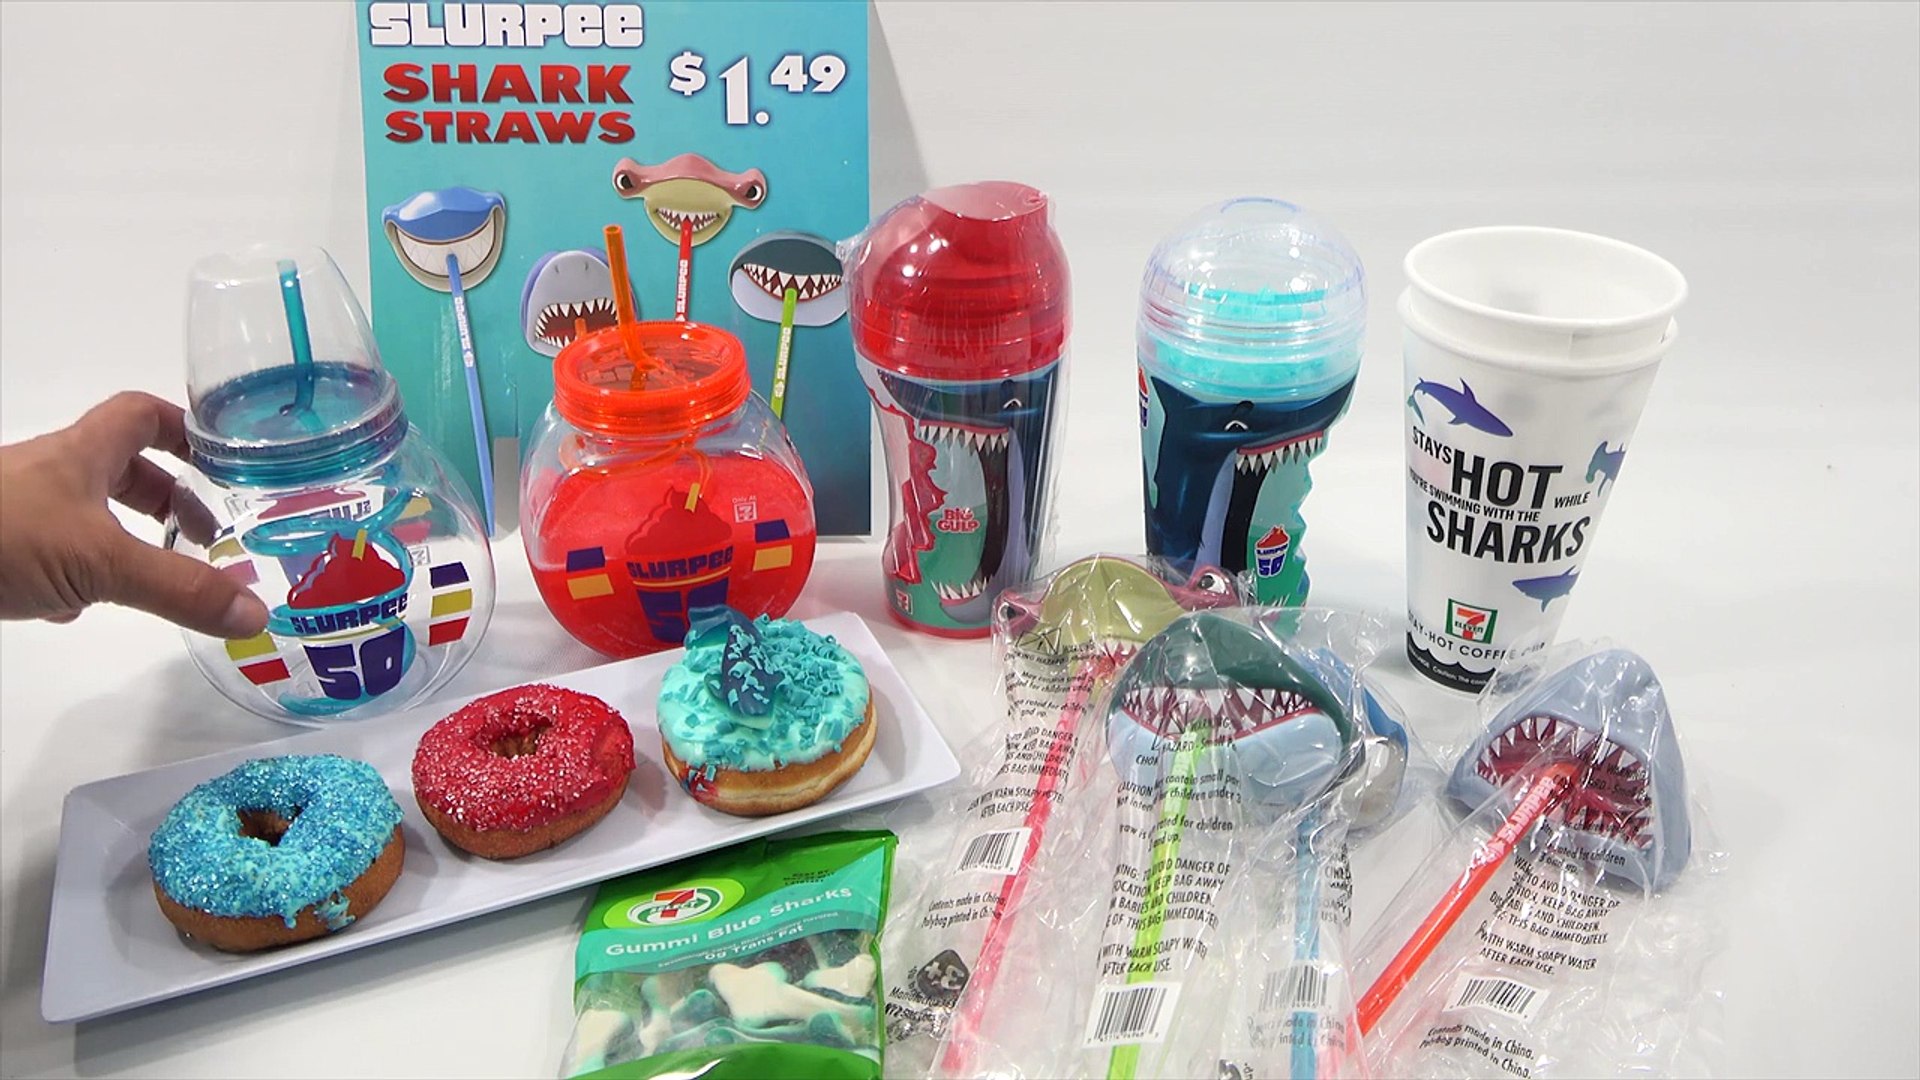 7-11 Shark Week Slurpee Cups, Shark Straws, Shark Donut!